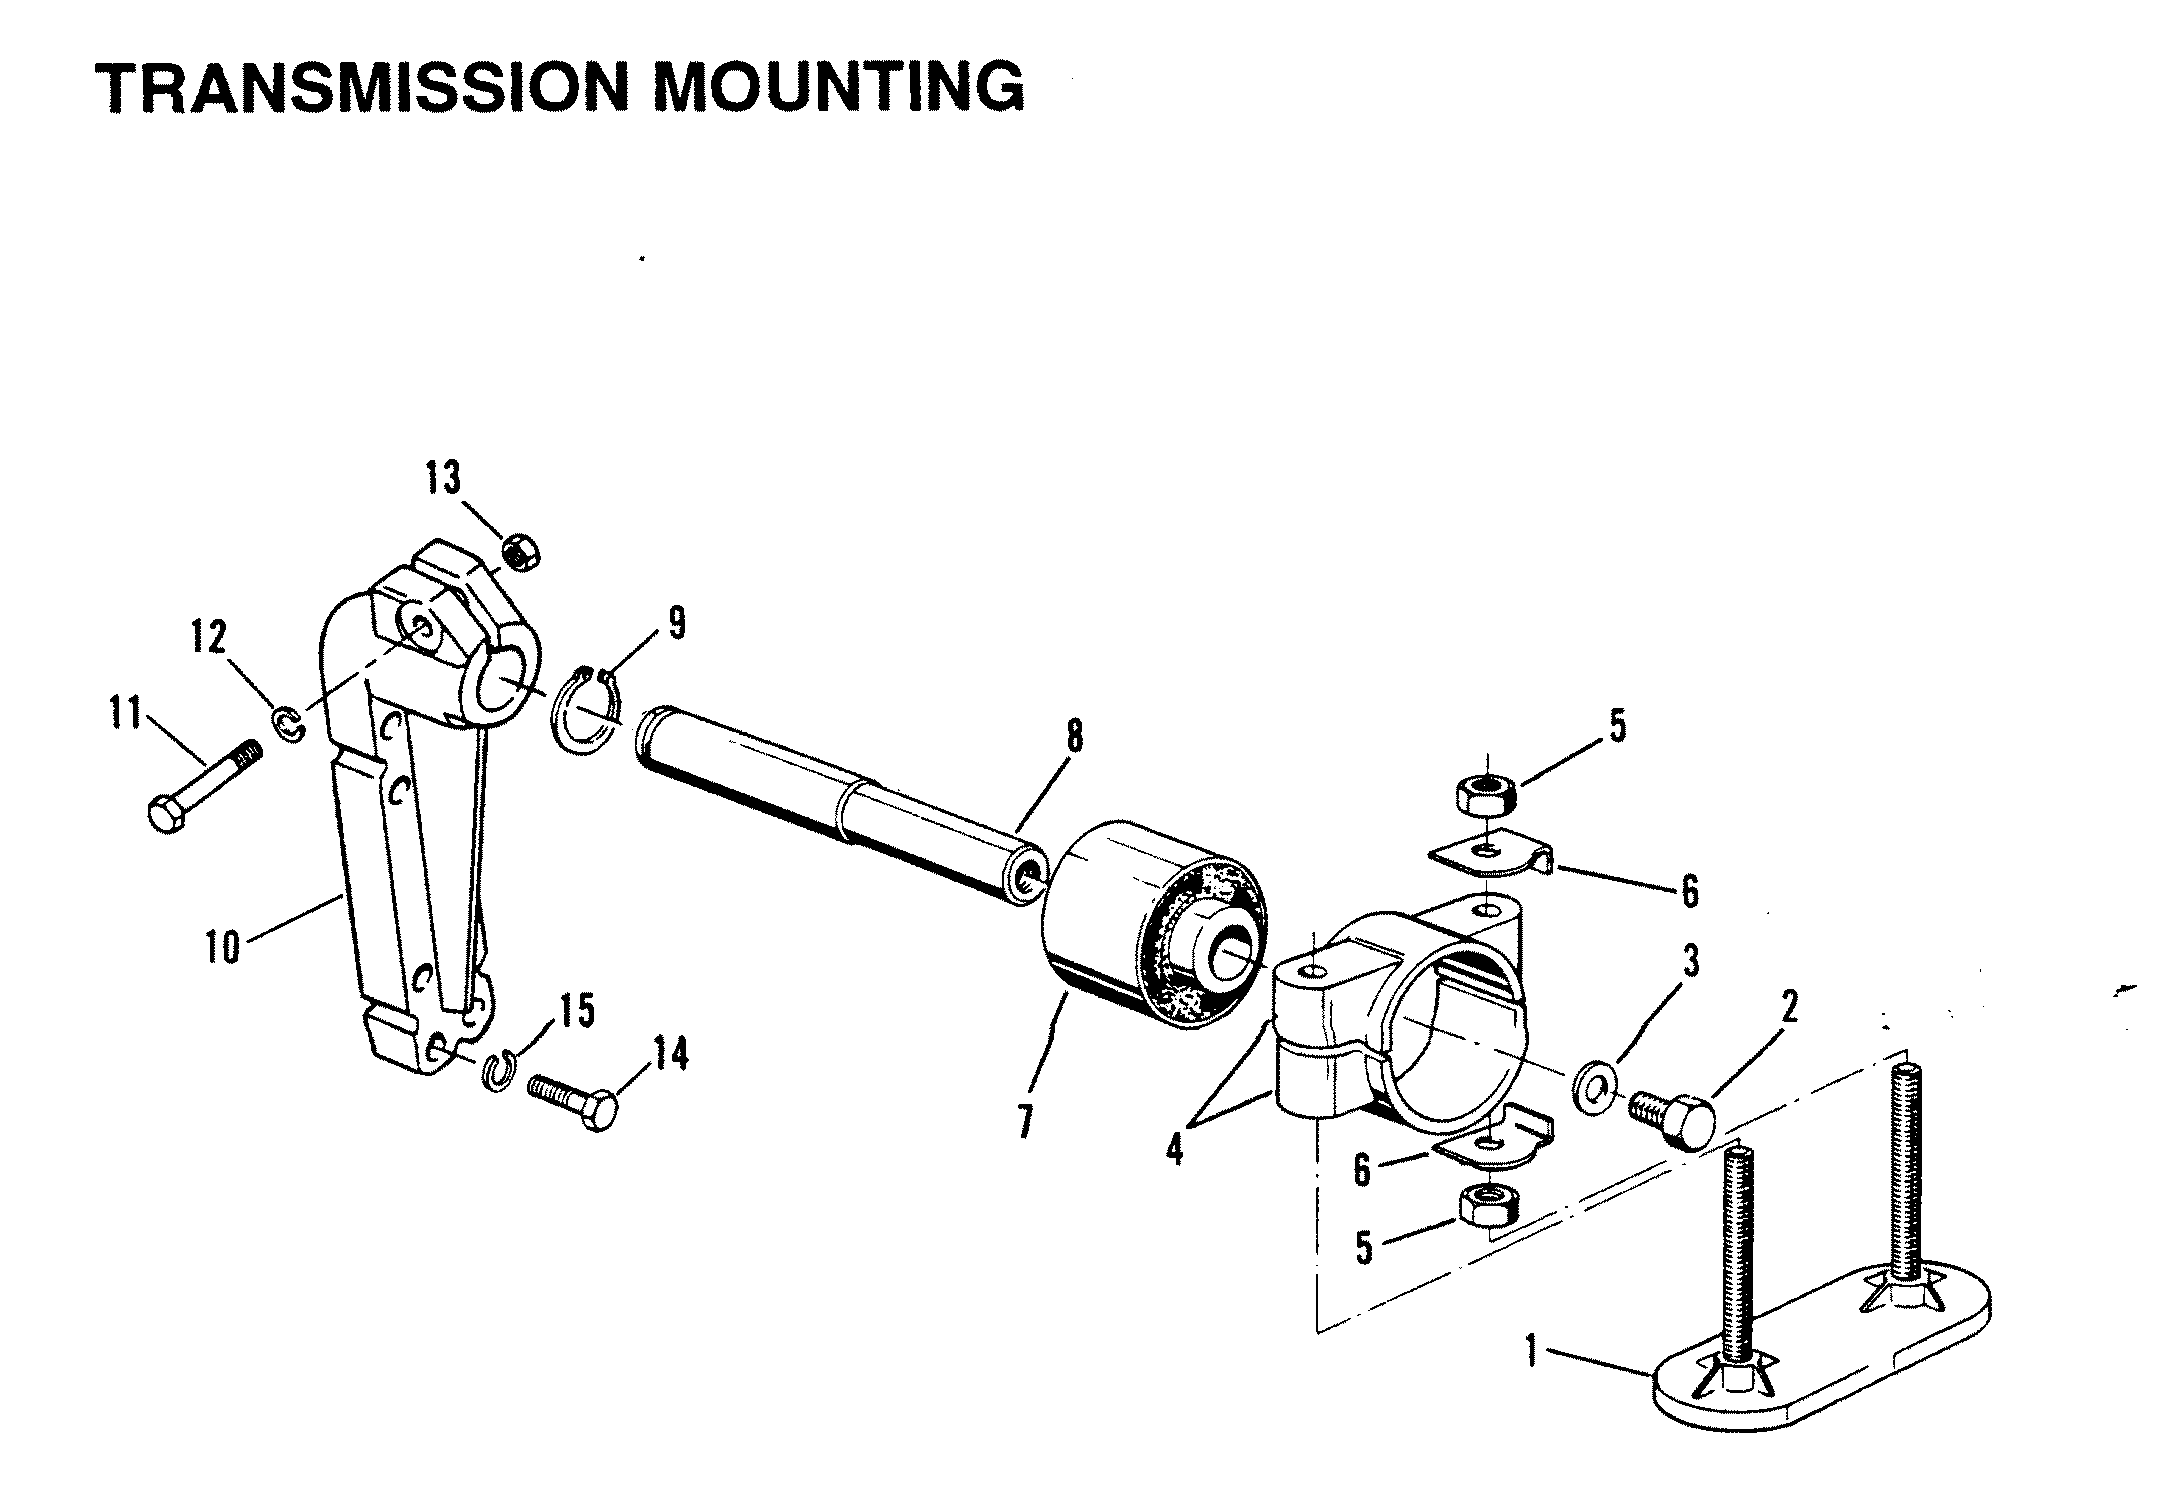 TRANSMISSION MOUNTING (INBOARD)